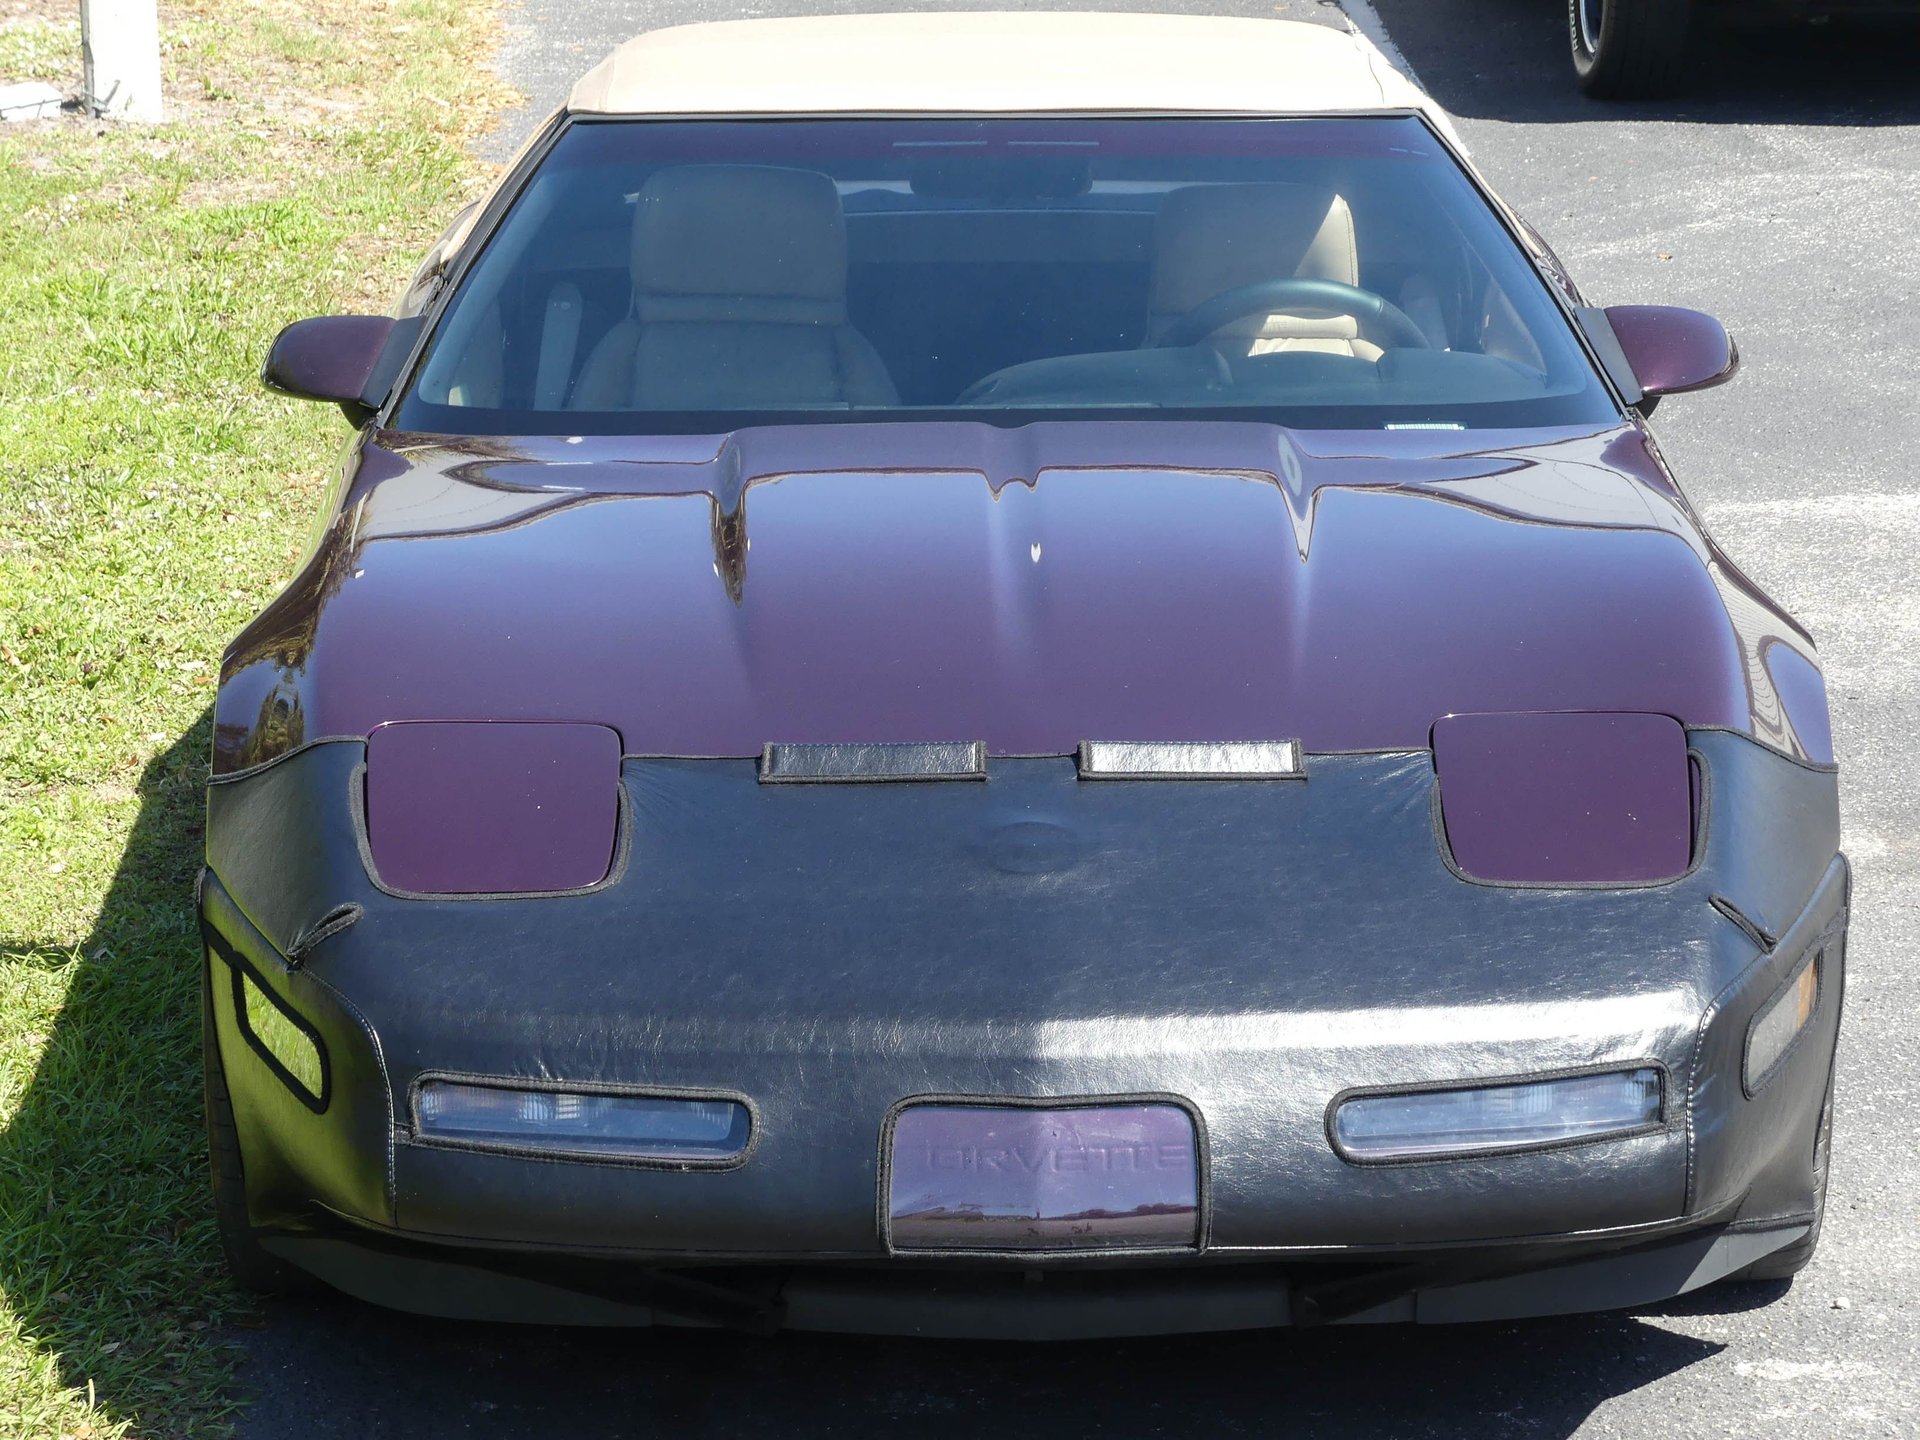 1992 Corvette Convertible Preserving Classic Elegance in Automotive History